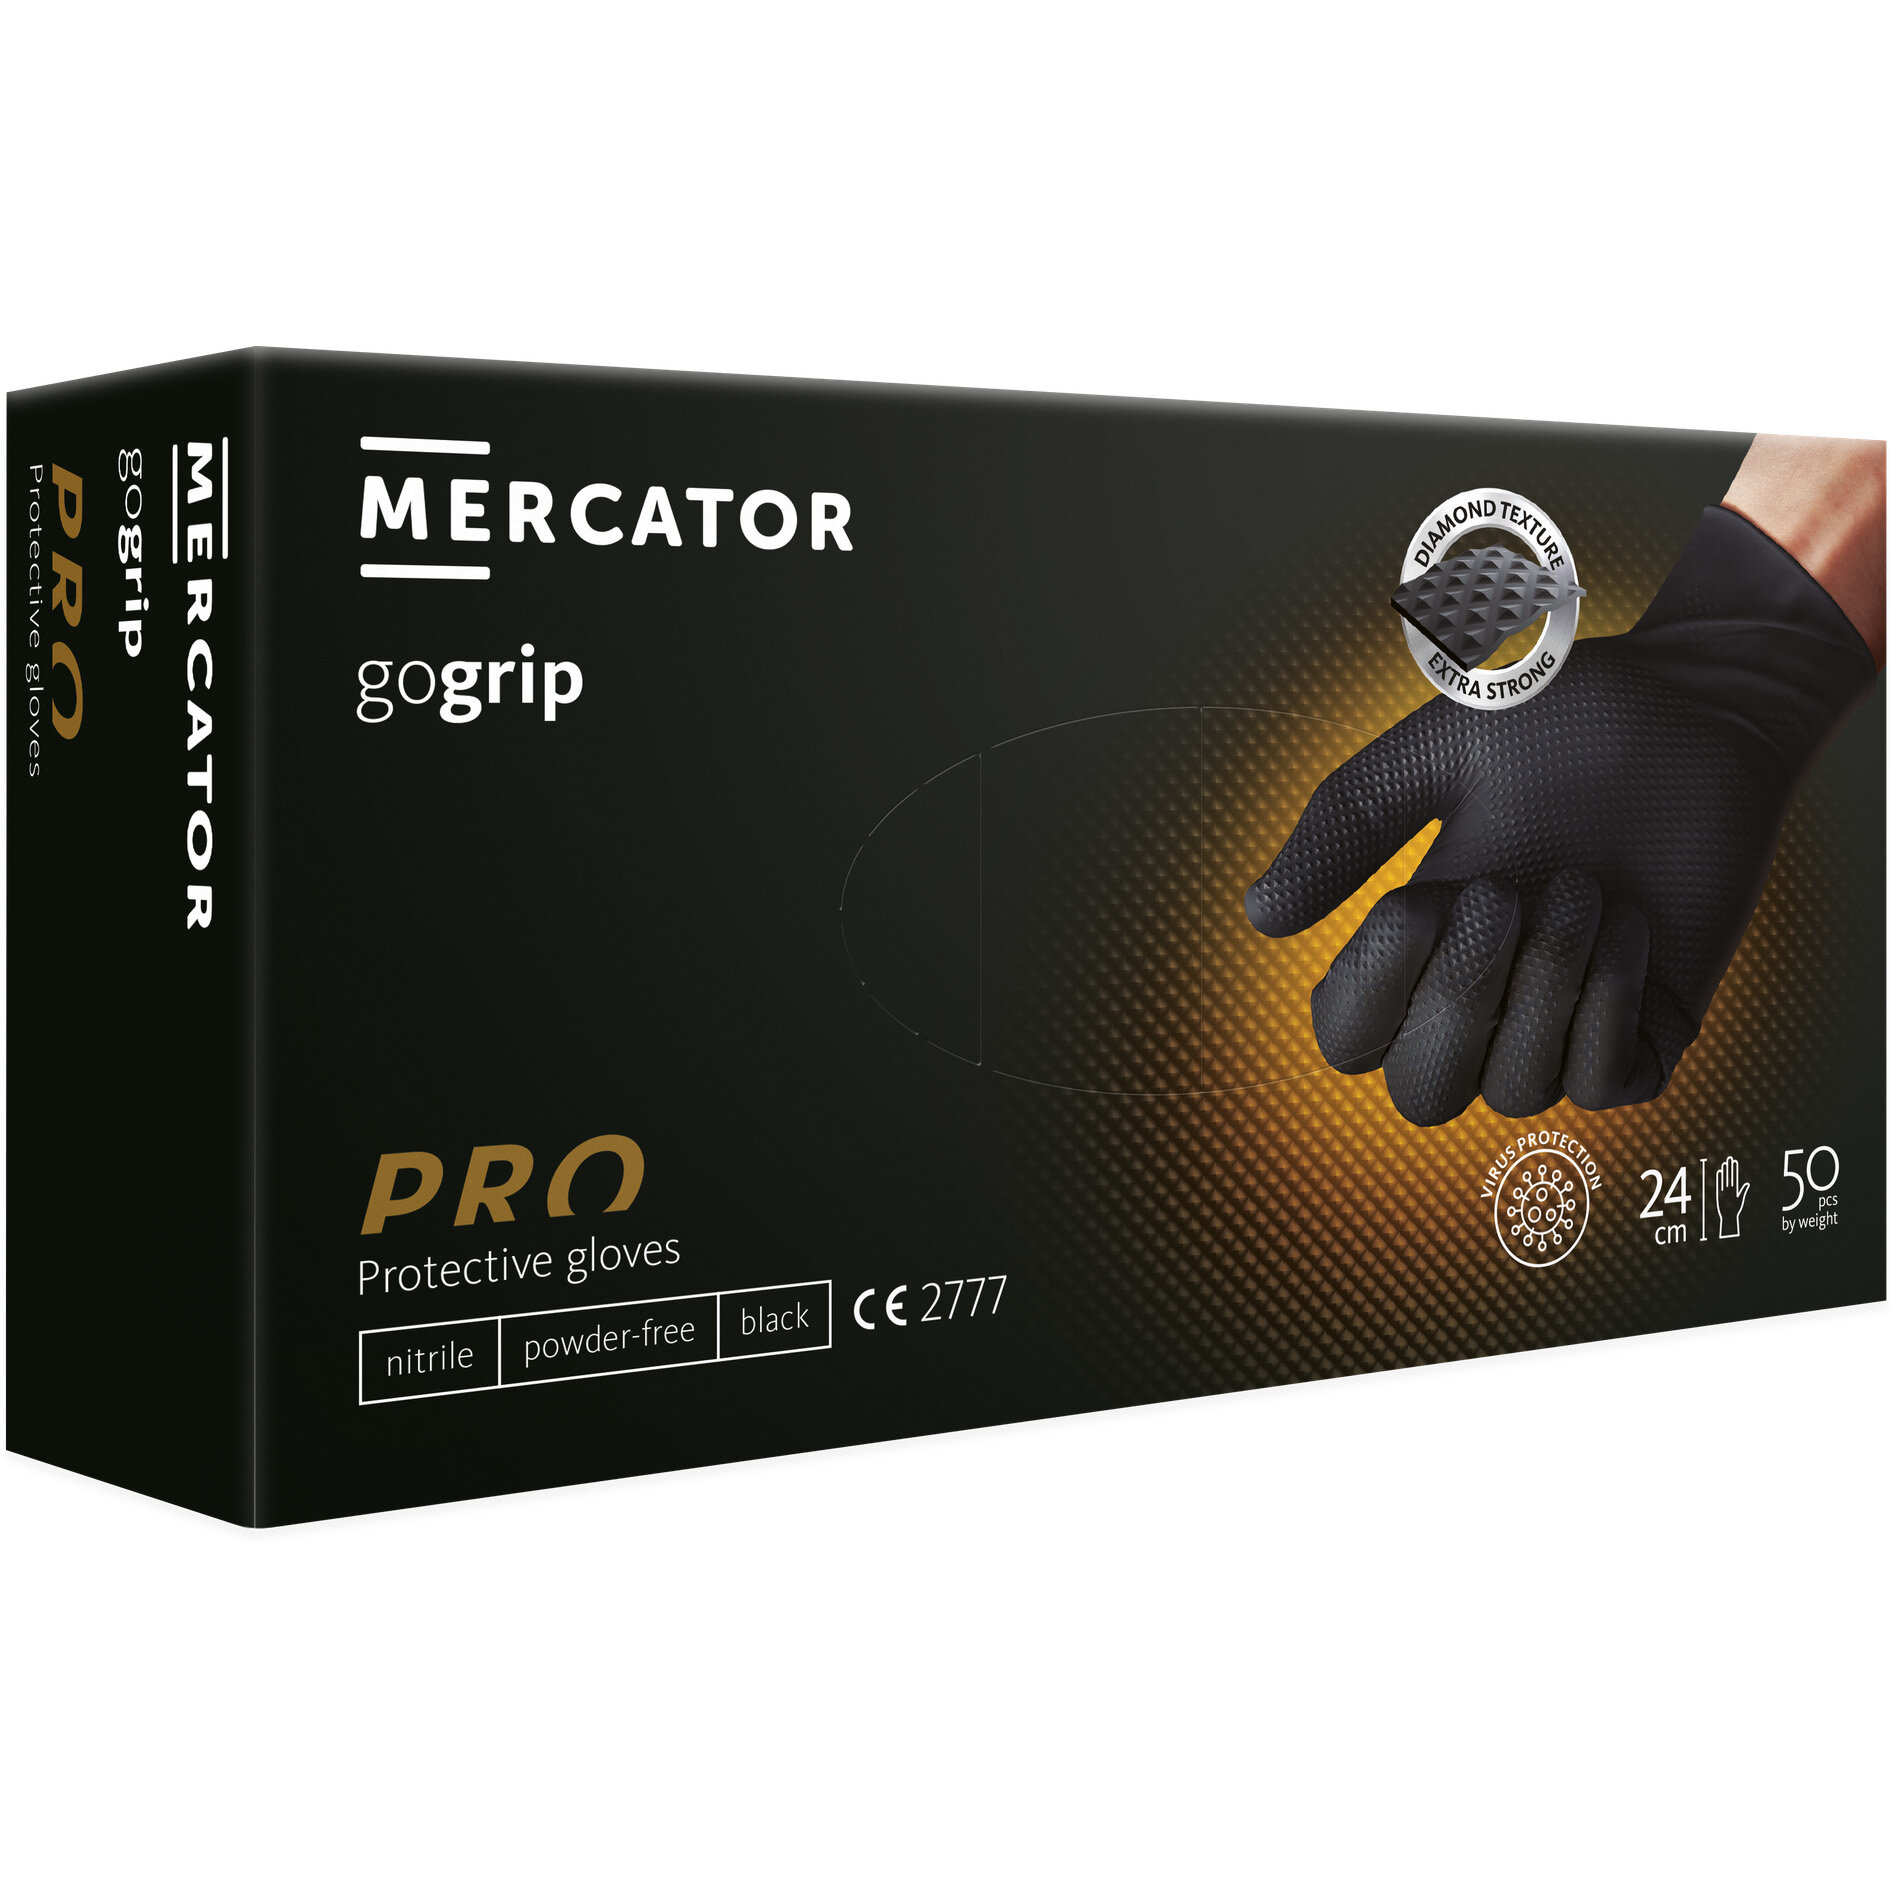 Mercator GoGrip nero XS guanti testurizzati in nitrile senza polvere - 50 pz.